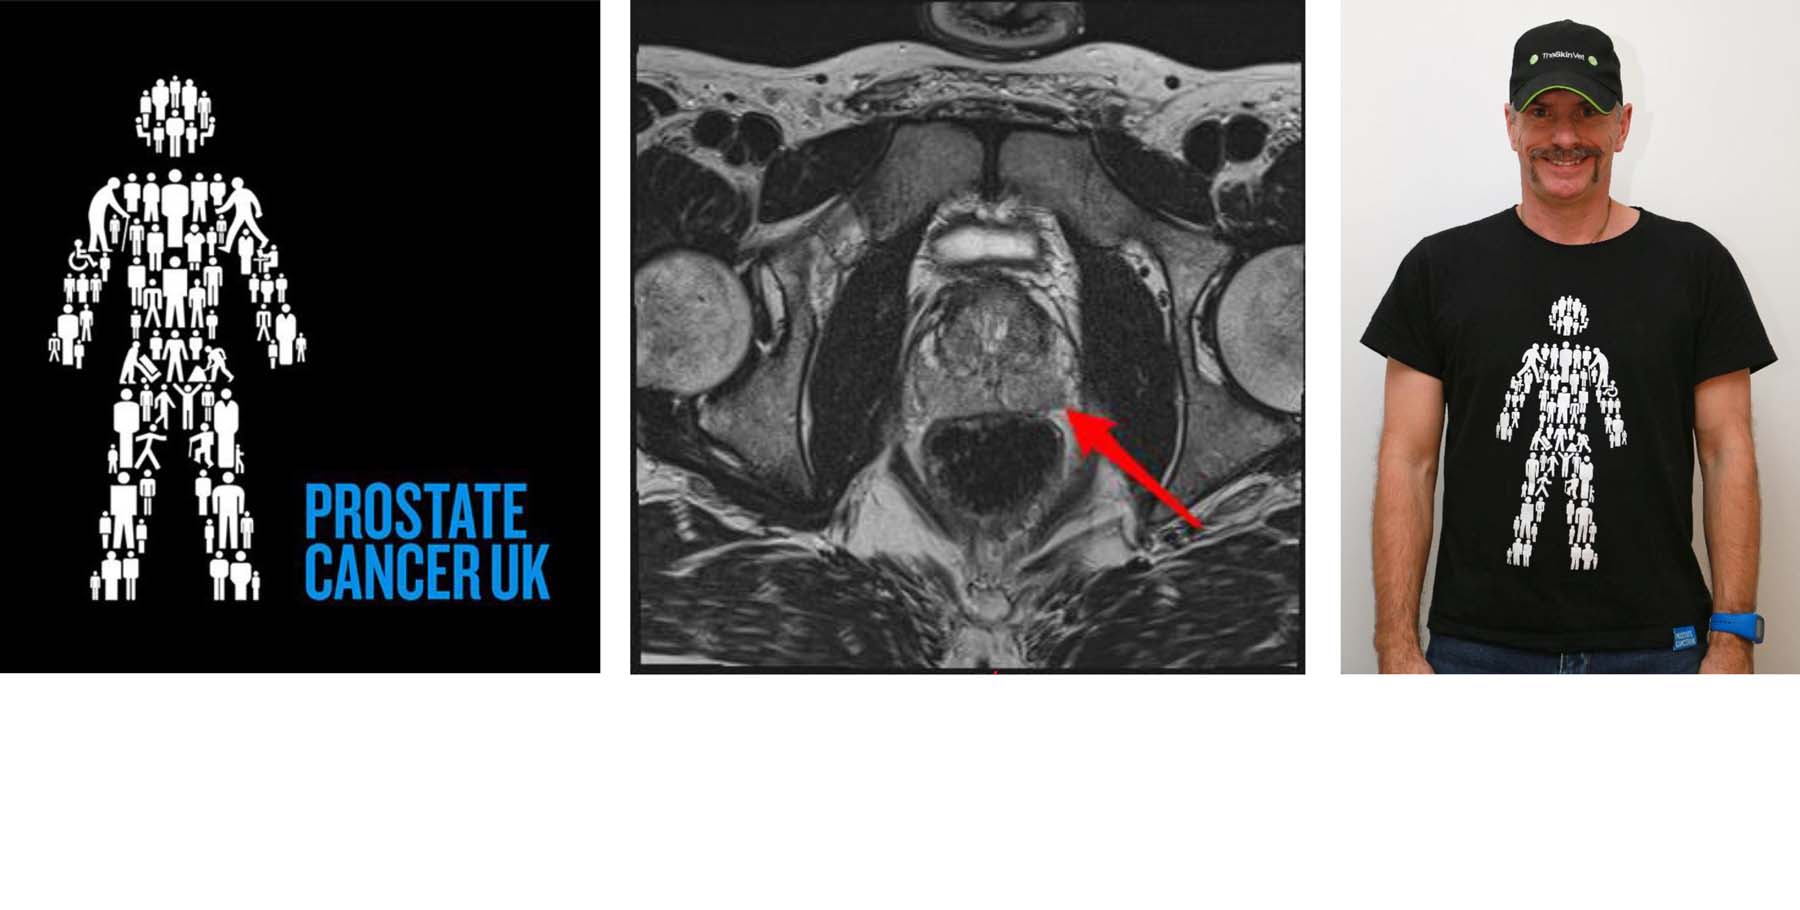 Prostate Cancer: my MRI scan & me, increasing awareness during Mo-vember